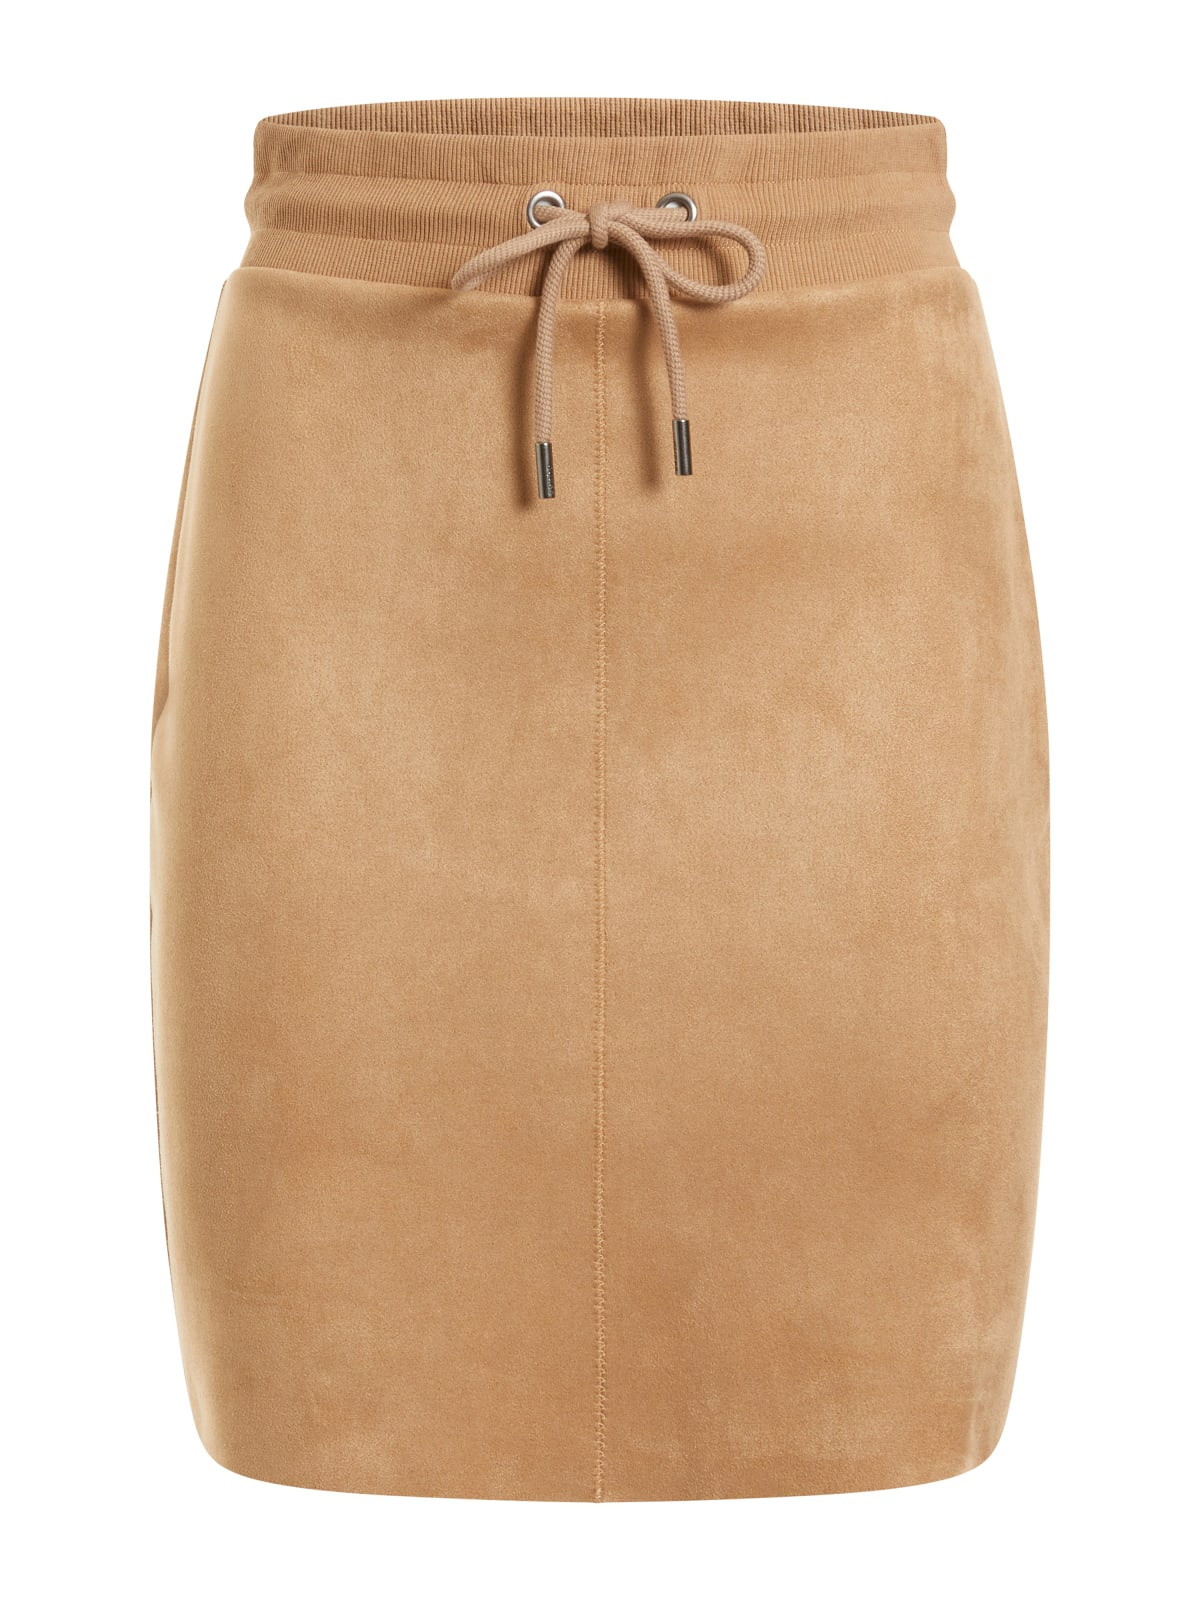 Suede-like skirt, Beige, large image number 0